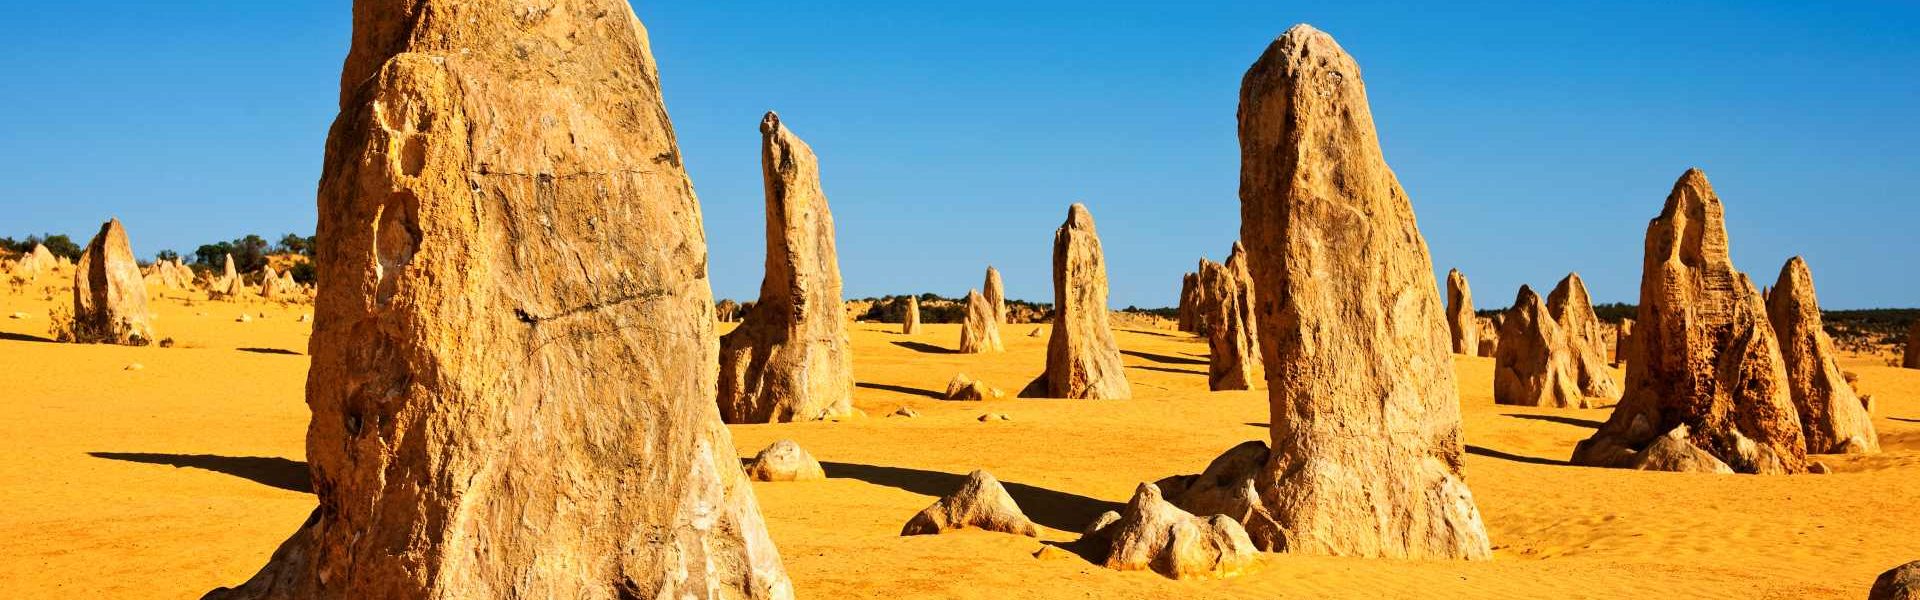 Rock formations in remote desert field